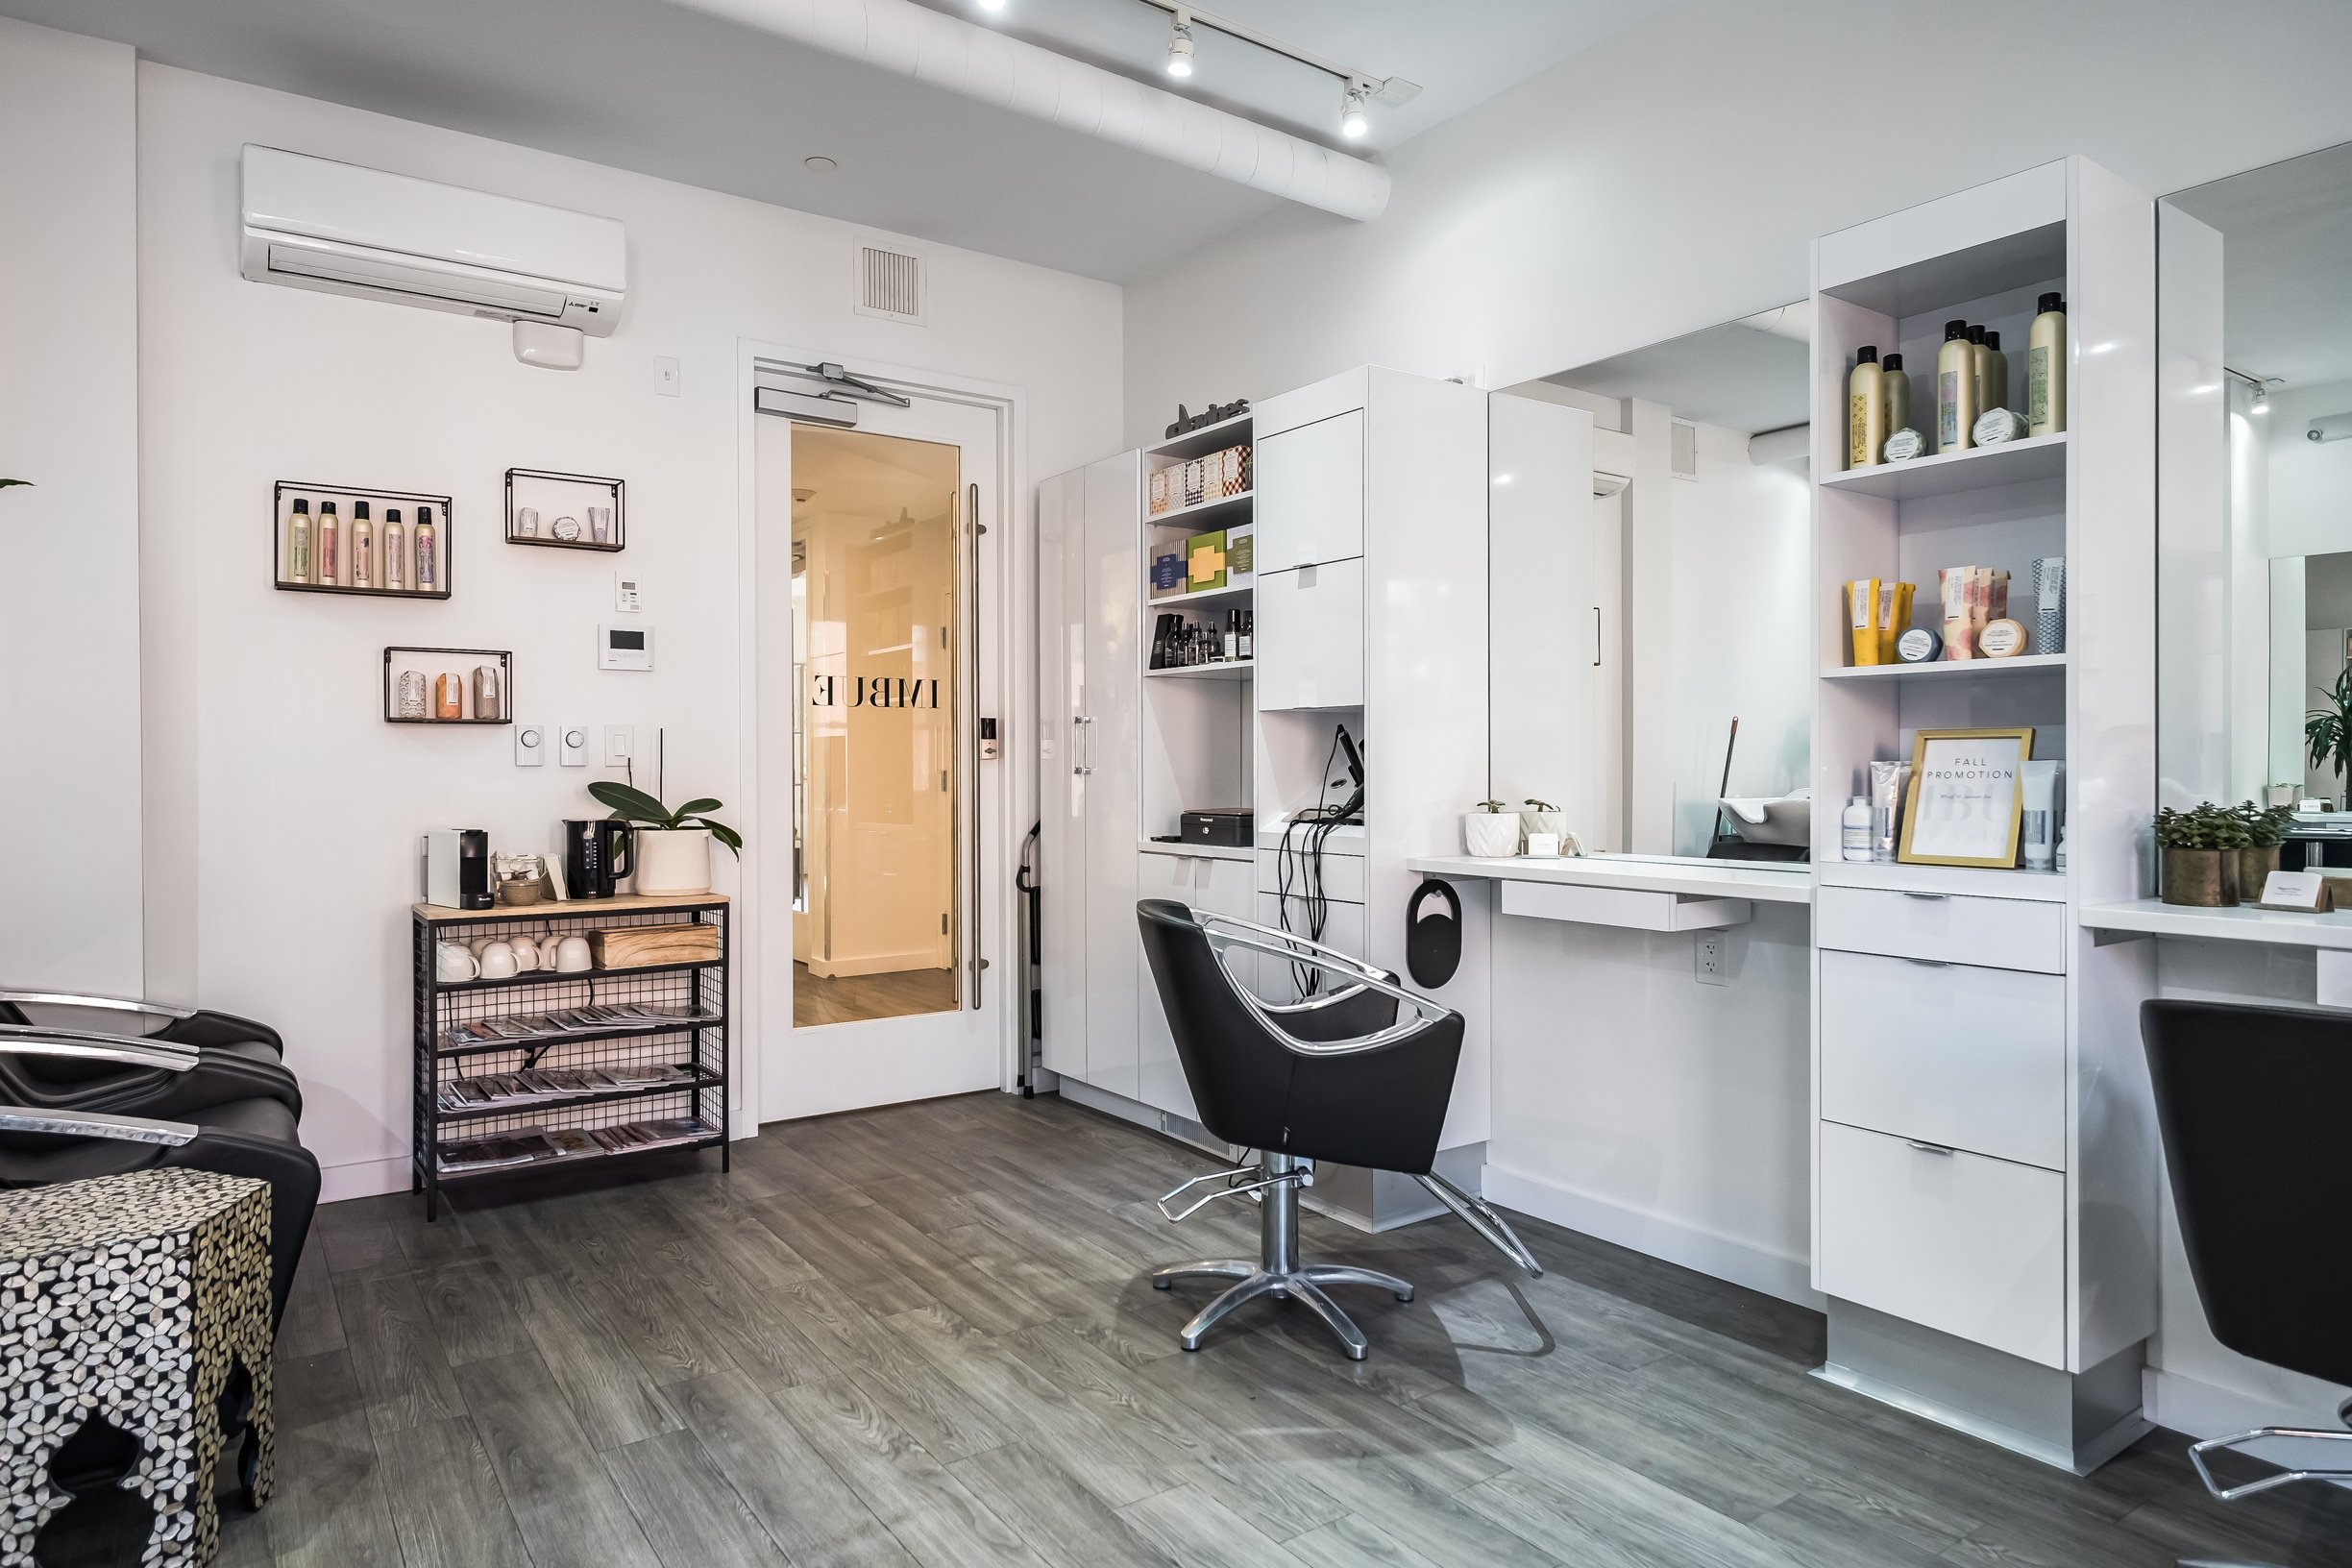 Newbury Street all-inclusive hair salon studio for rent